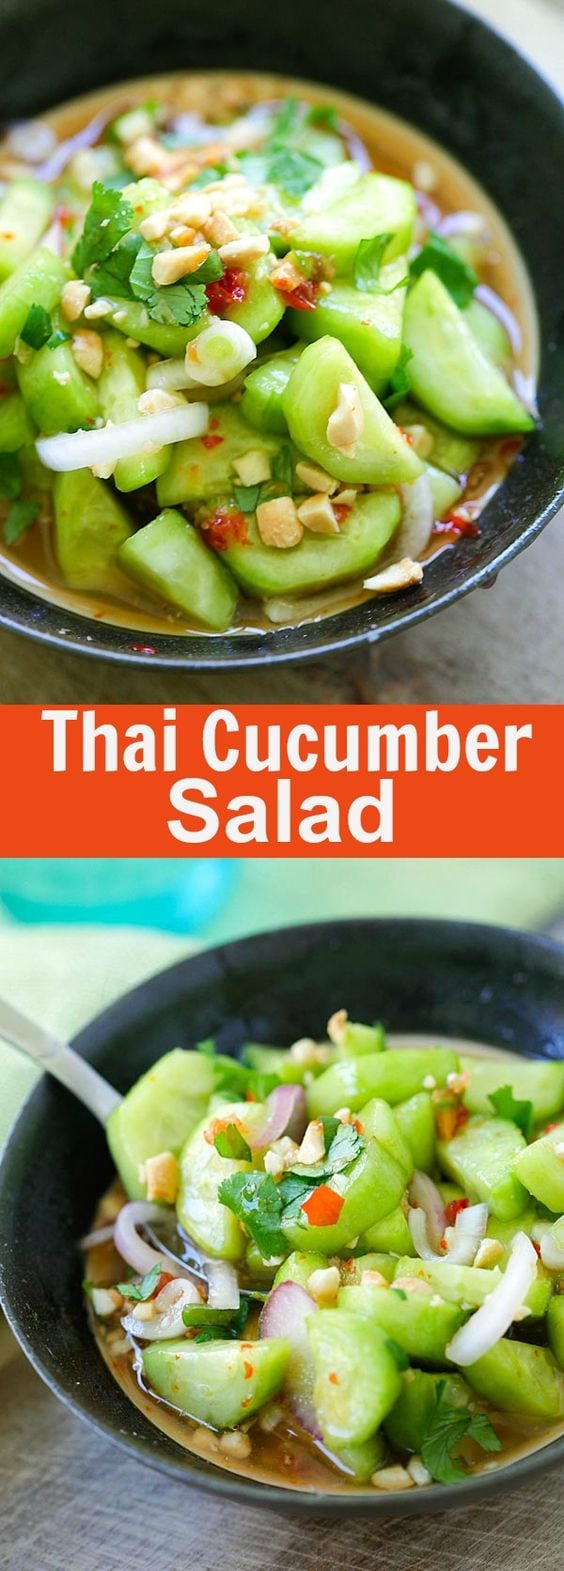 Thai Cucumber Salad - easiest and best homemade Thai cucumber salad recipe that is better than your favorite Thai restaurants, guaranteed | rasamalaysia.com